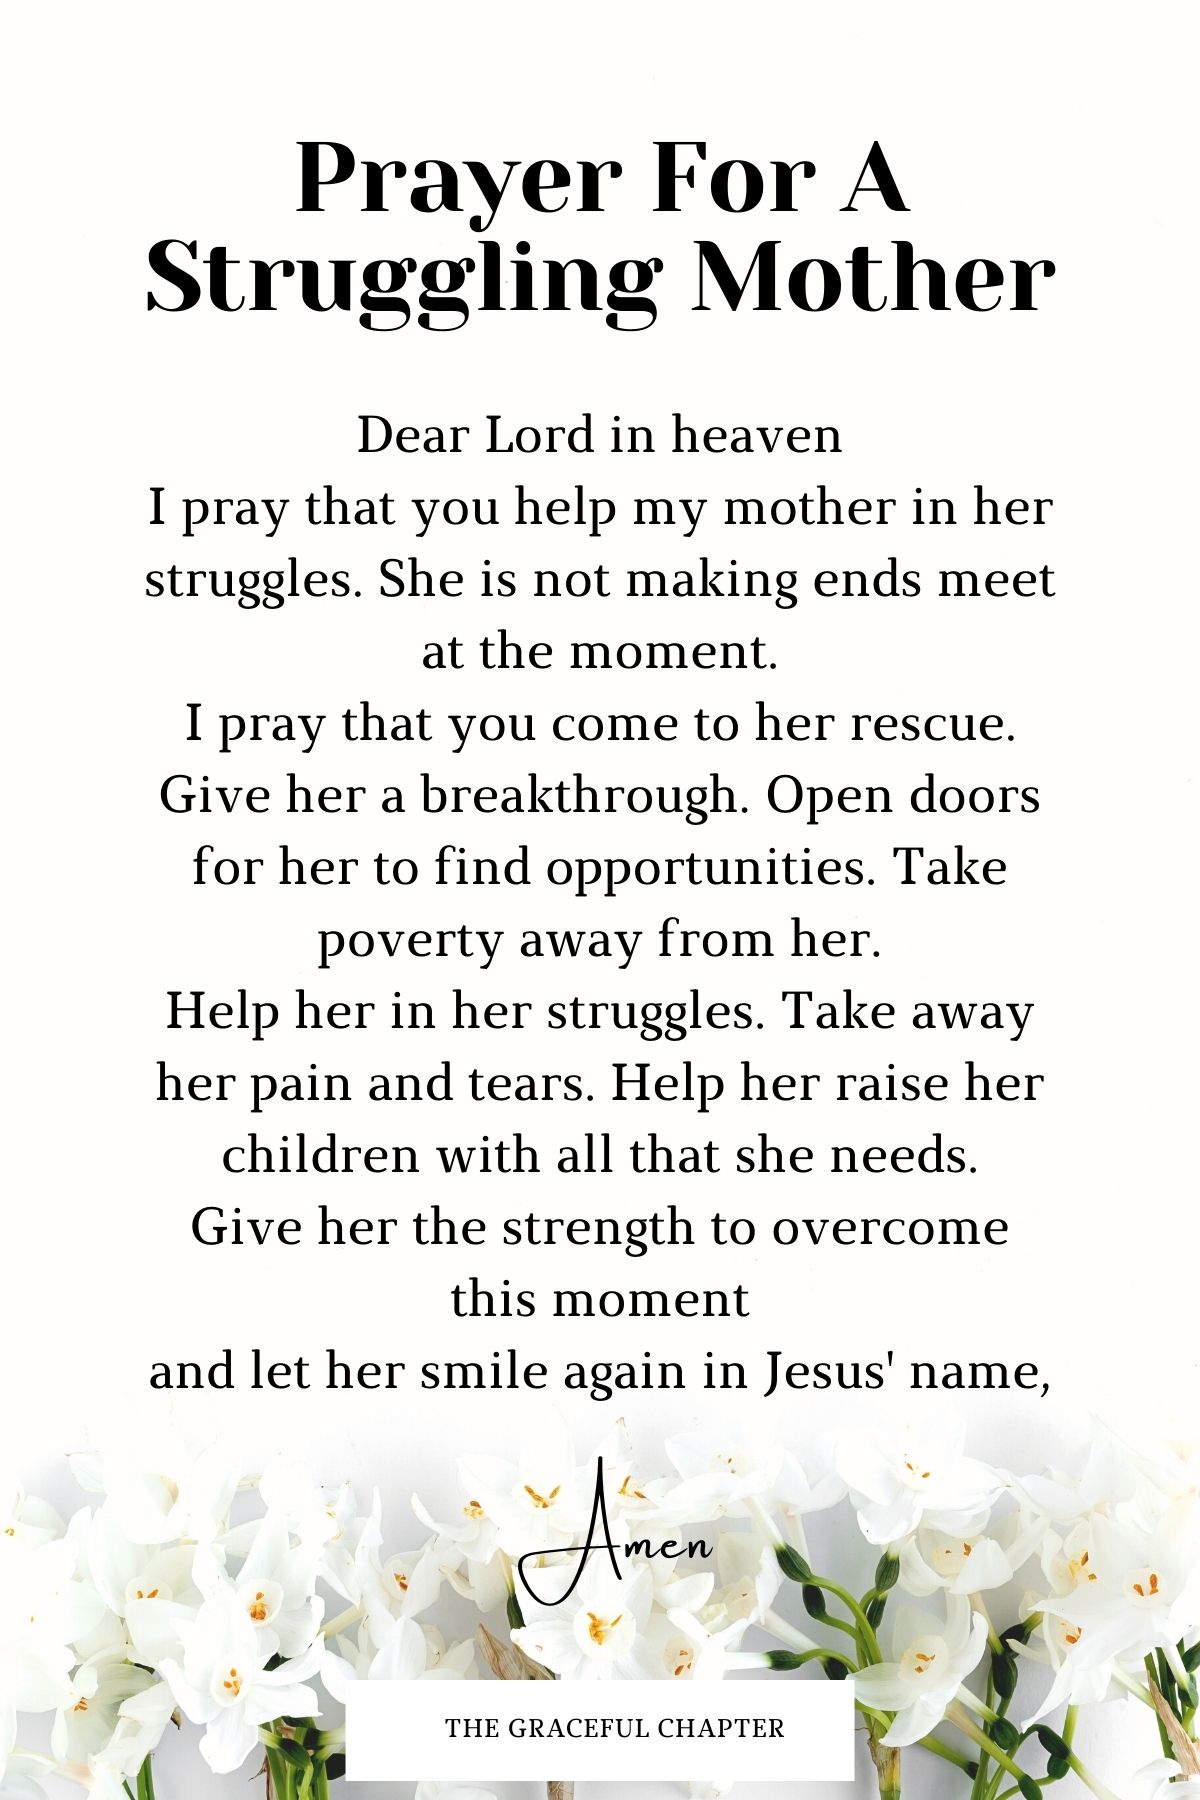 Prayer for a struggling mother